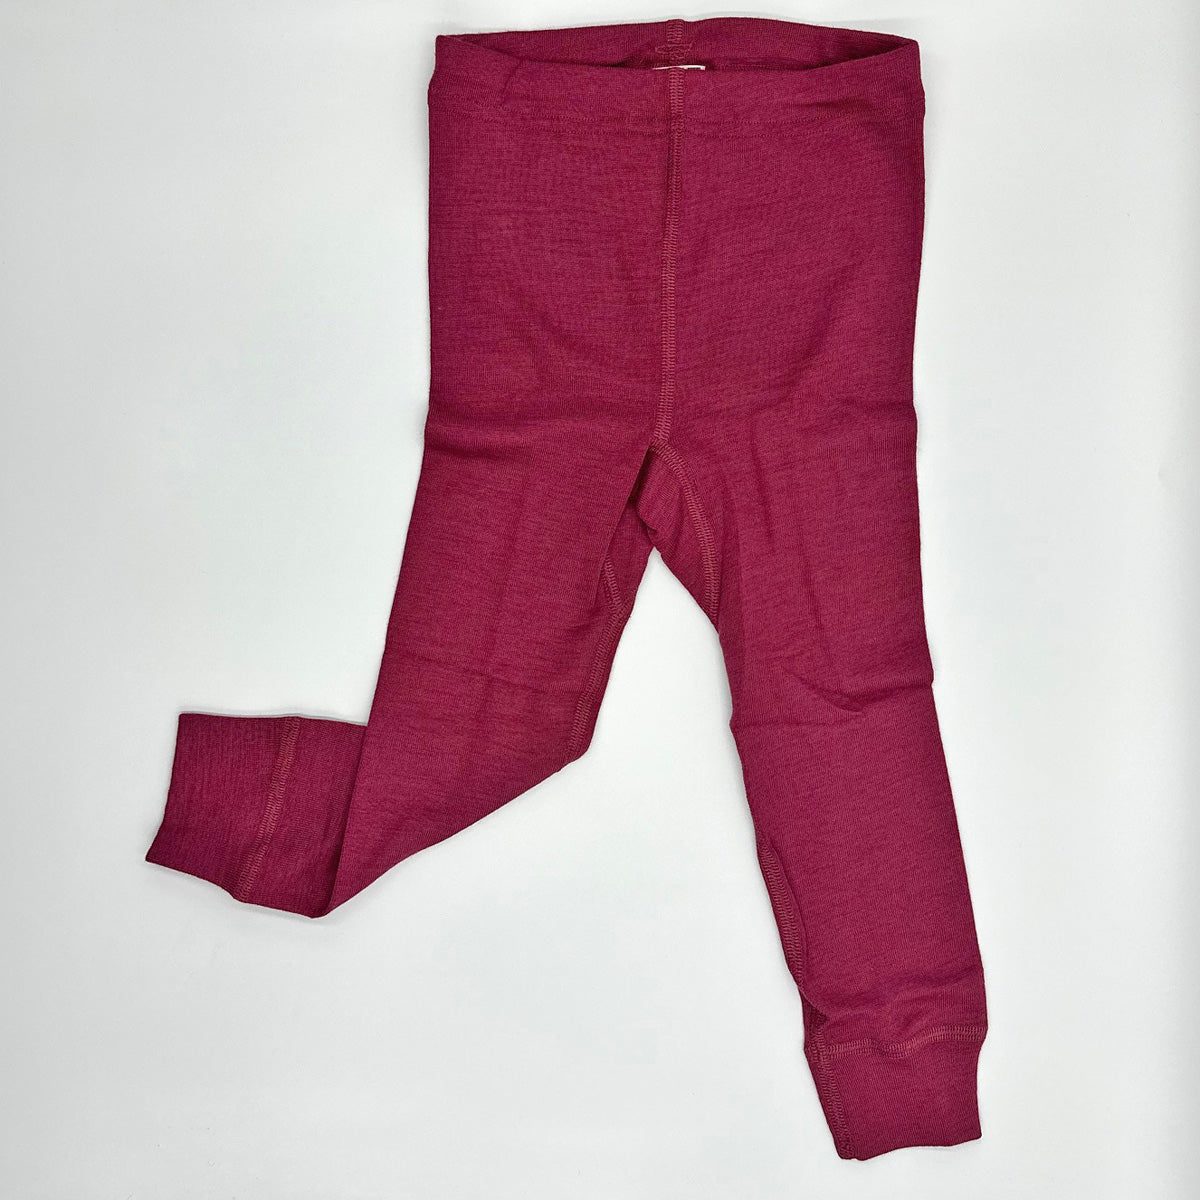 HOCOSA Women's Organic Merino Wool Long Underwear Pants